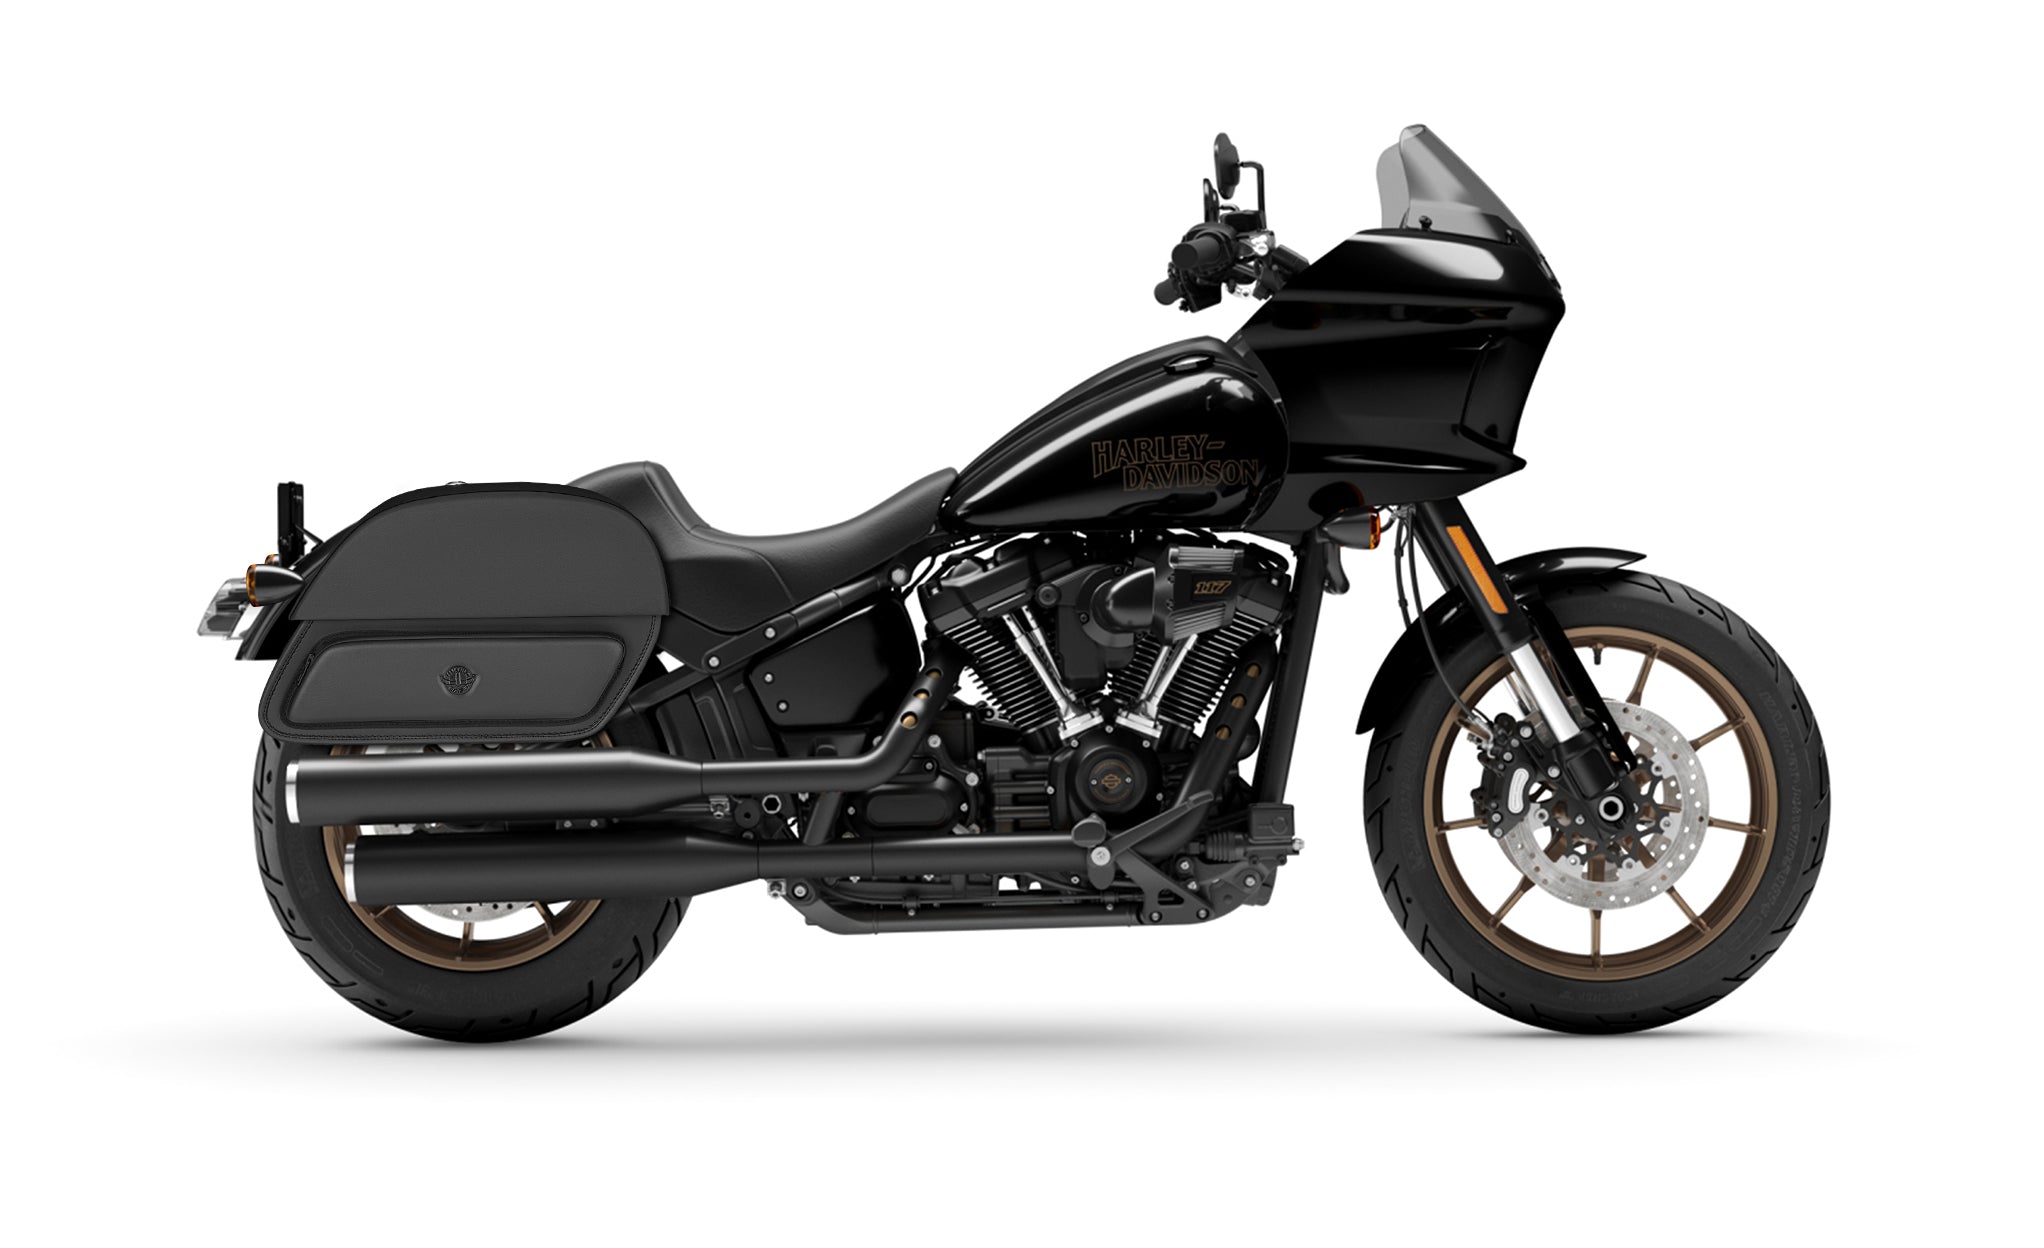 33L - Pantheon Large Saddlebags for Harley Davidson Softail Low Rider ST FXLRST on Bike Photo @expand